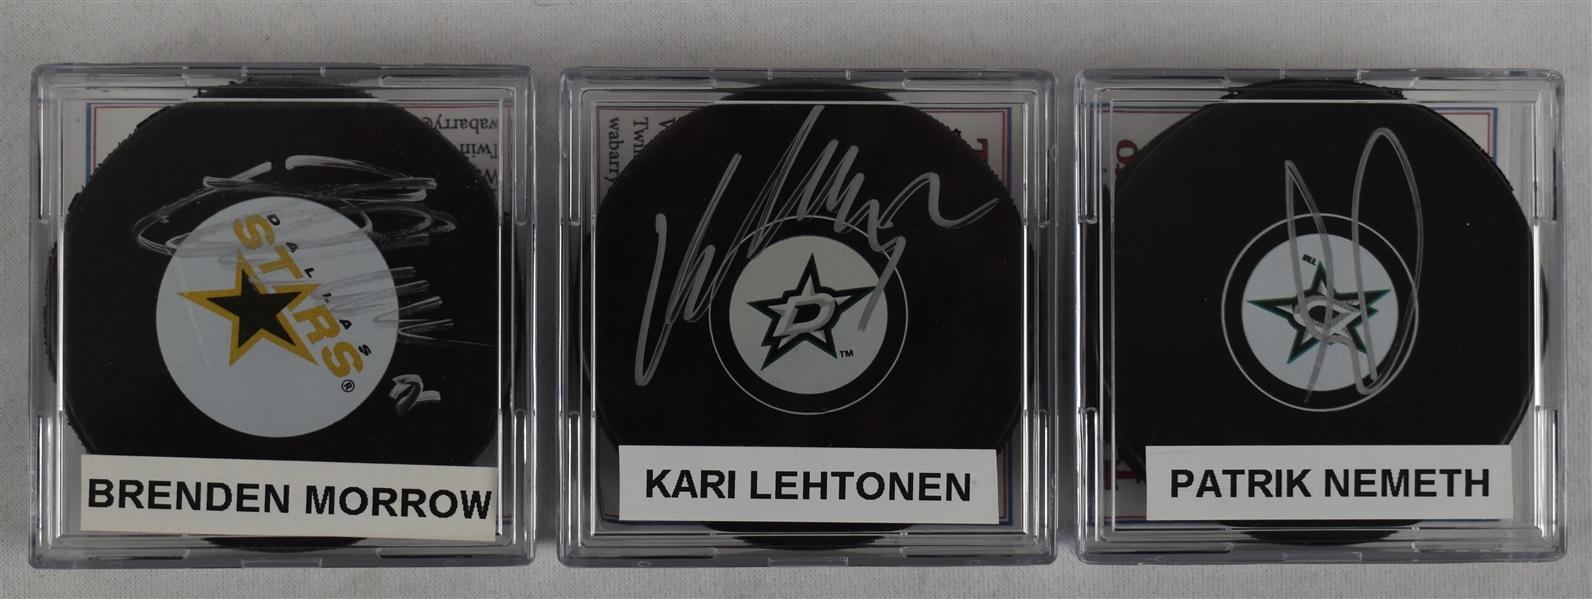 Lehtonen Morrow & Nemeth Lot of 3 Autographed Hockey Pucks w/Case